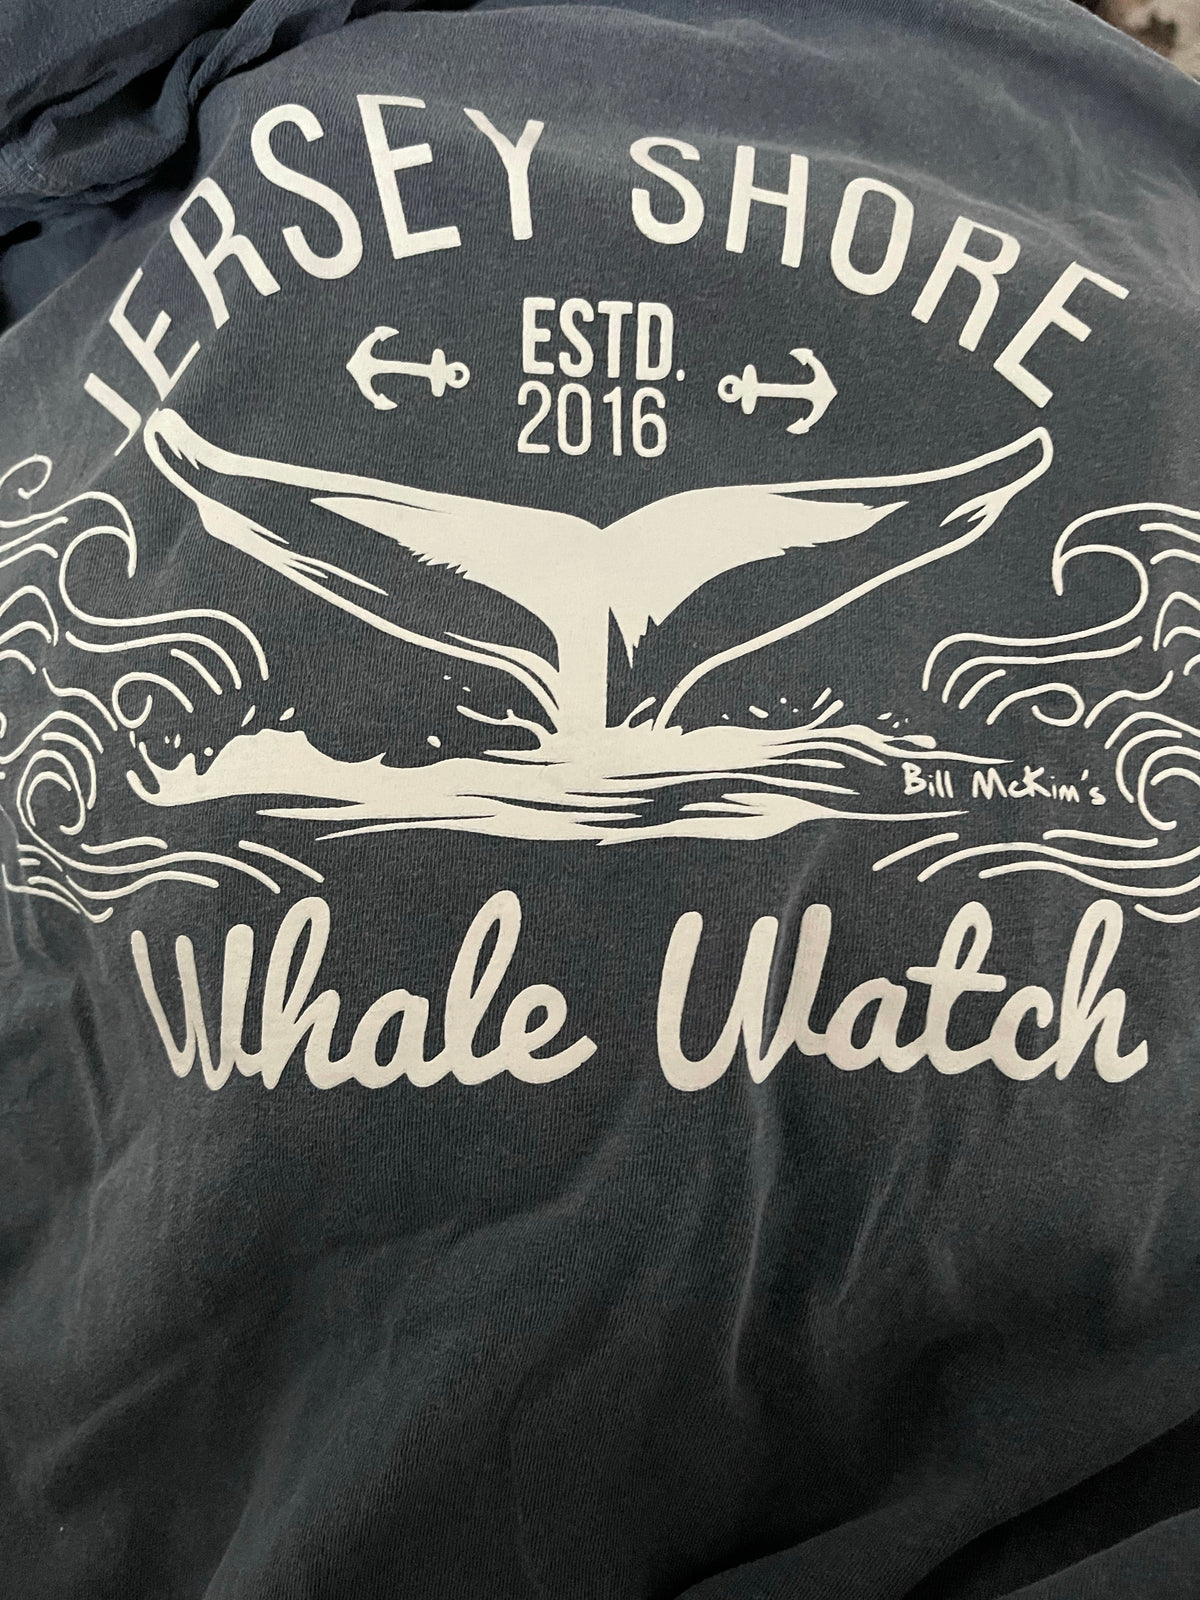 Jersey Shore Whale Watch Tshirt Amazing Quality Preshrunk Bill McKim Photography Medium BlueJean Blue Hooded T-shirt 